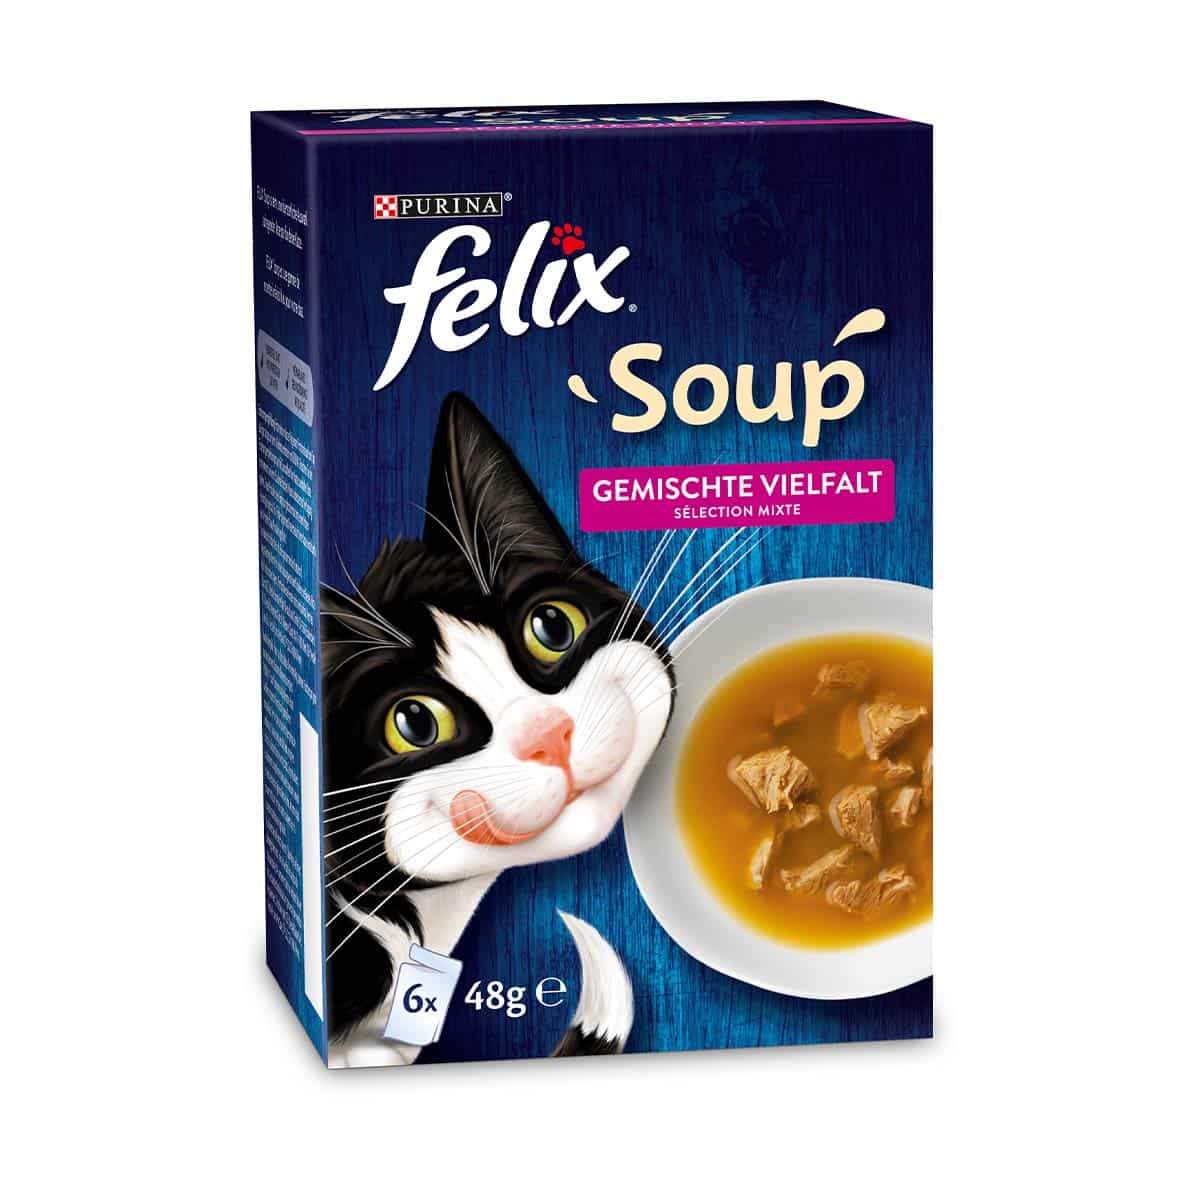 FELIX Soup Gesmischte Vielfalt mit Rind